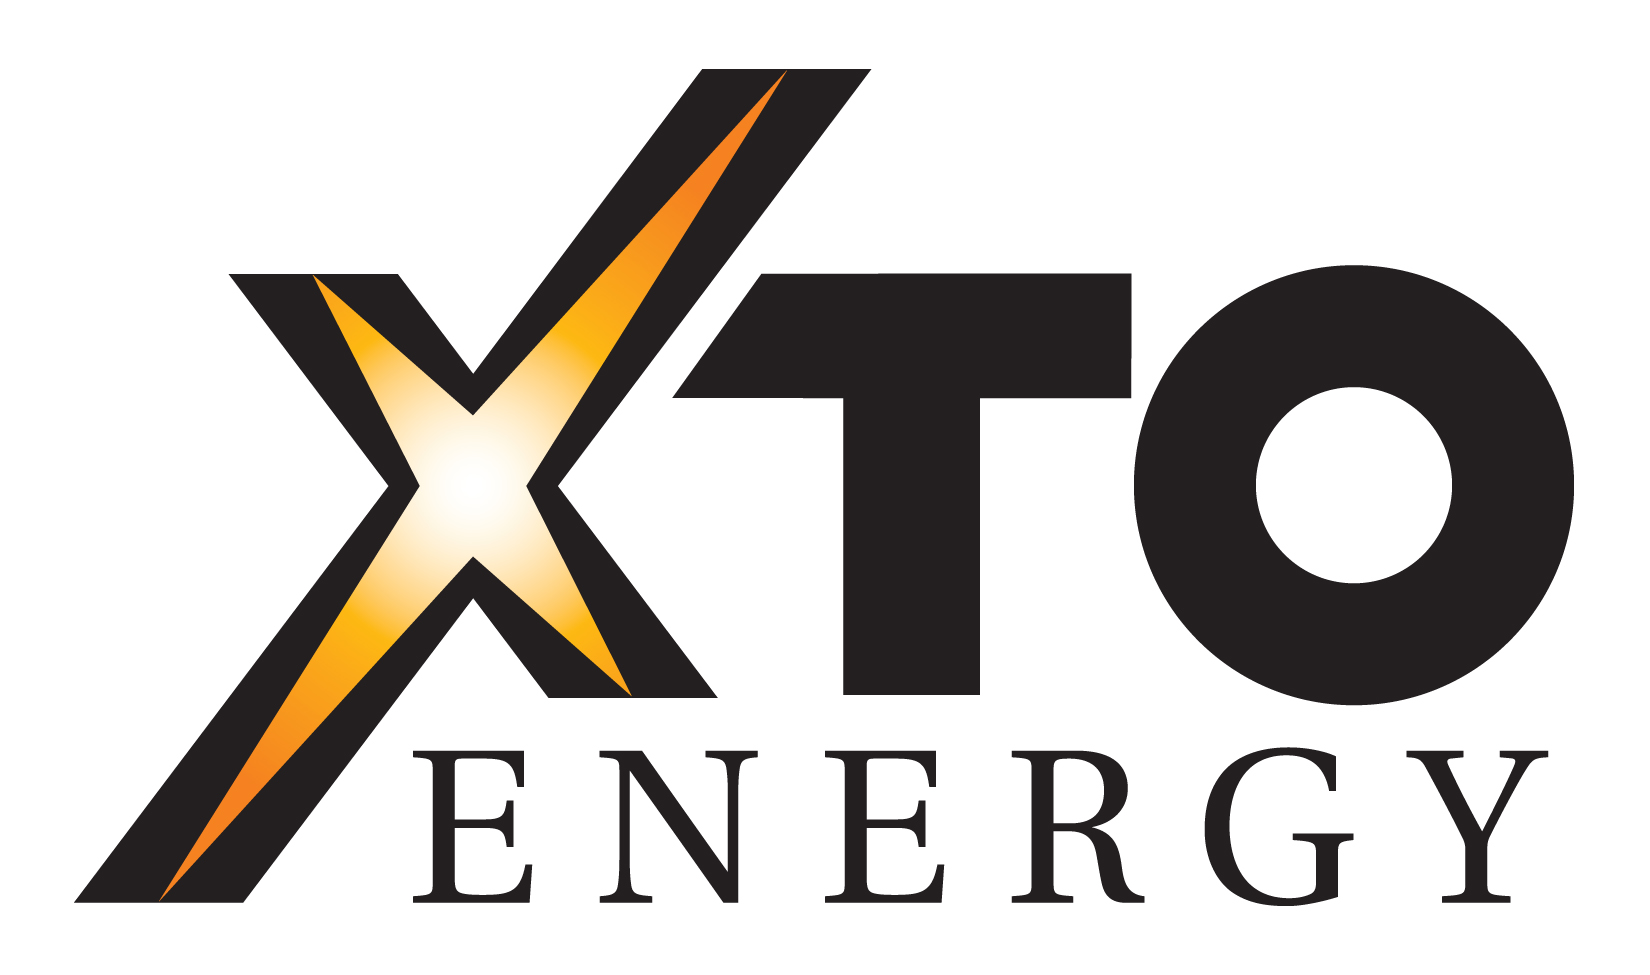 XTO Energy